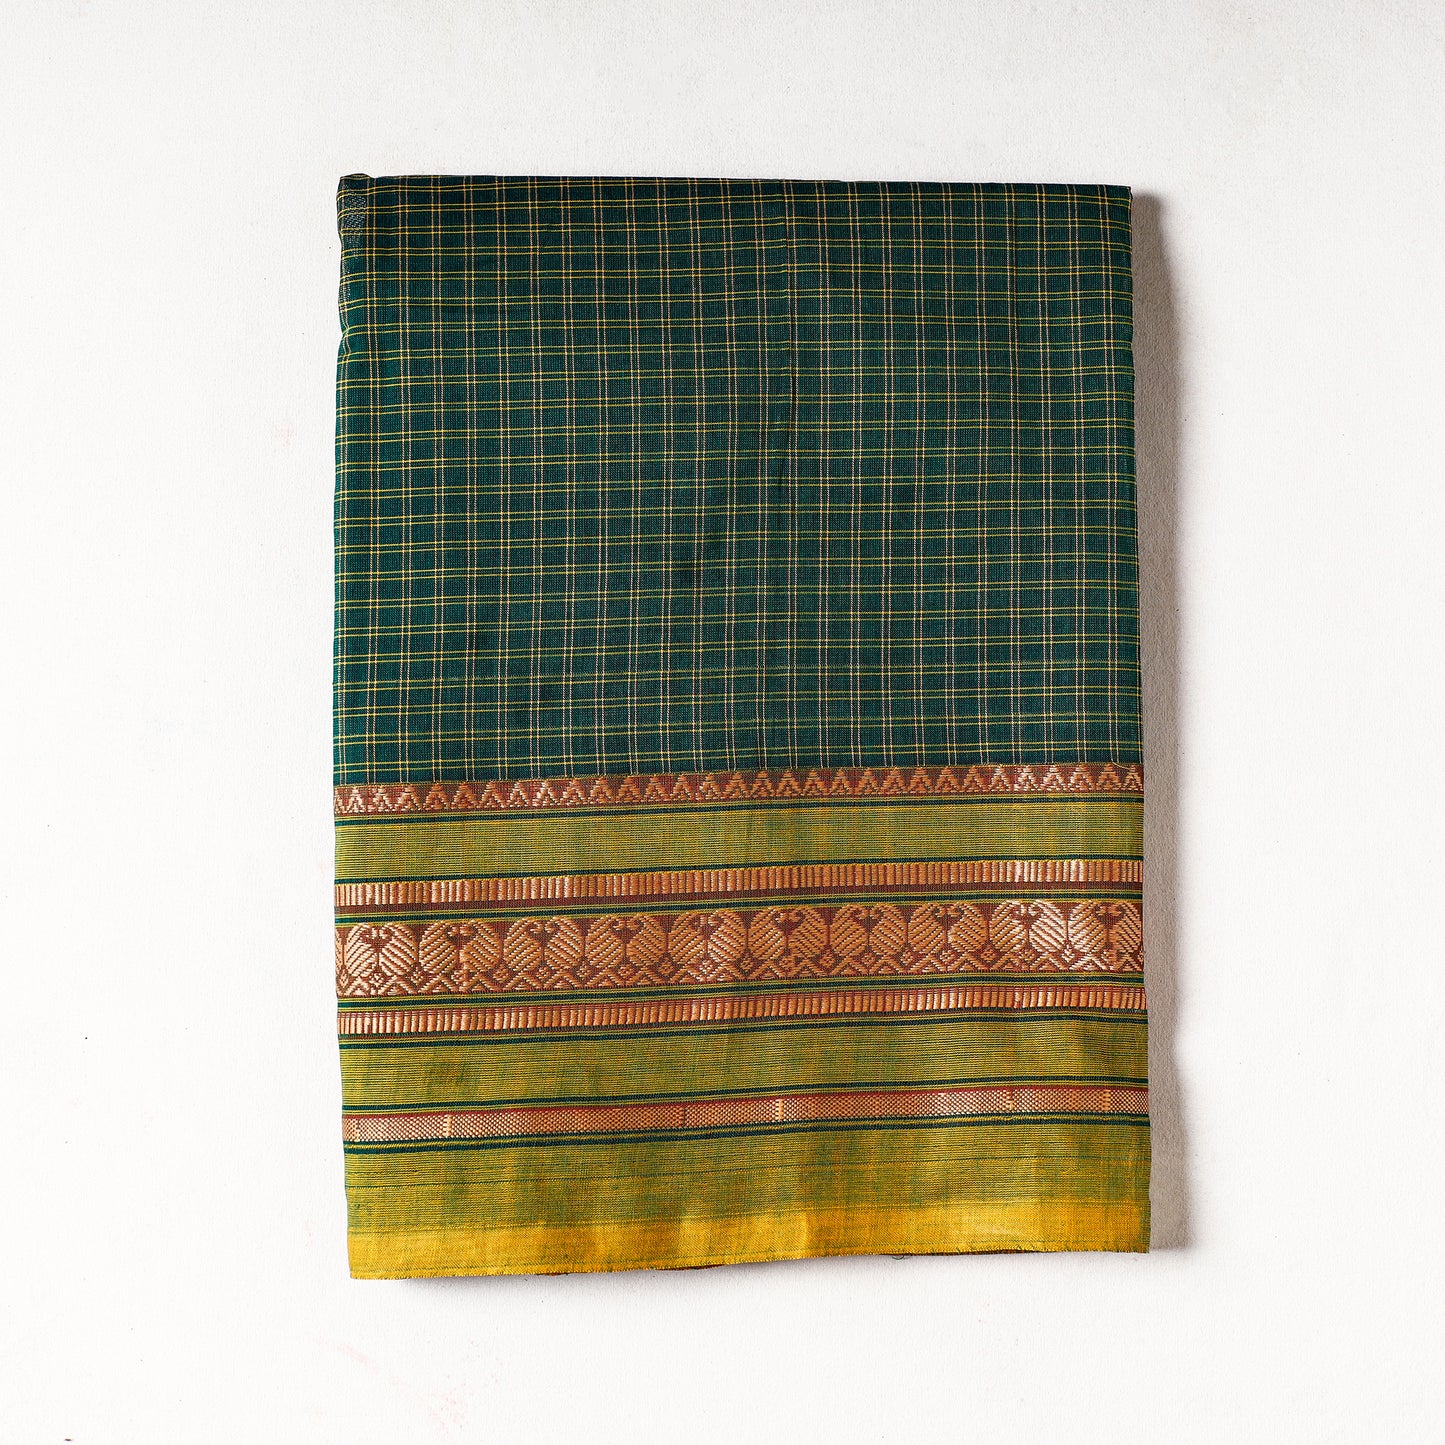 Green - Kanchipuram Cotton Precut Fabric (1.5 Meter)